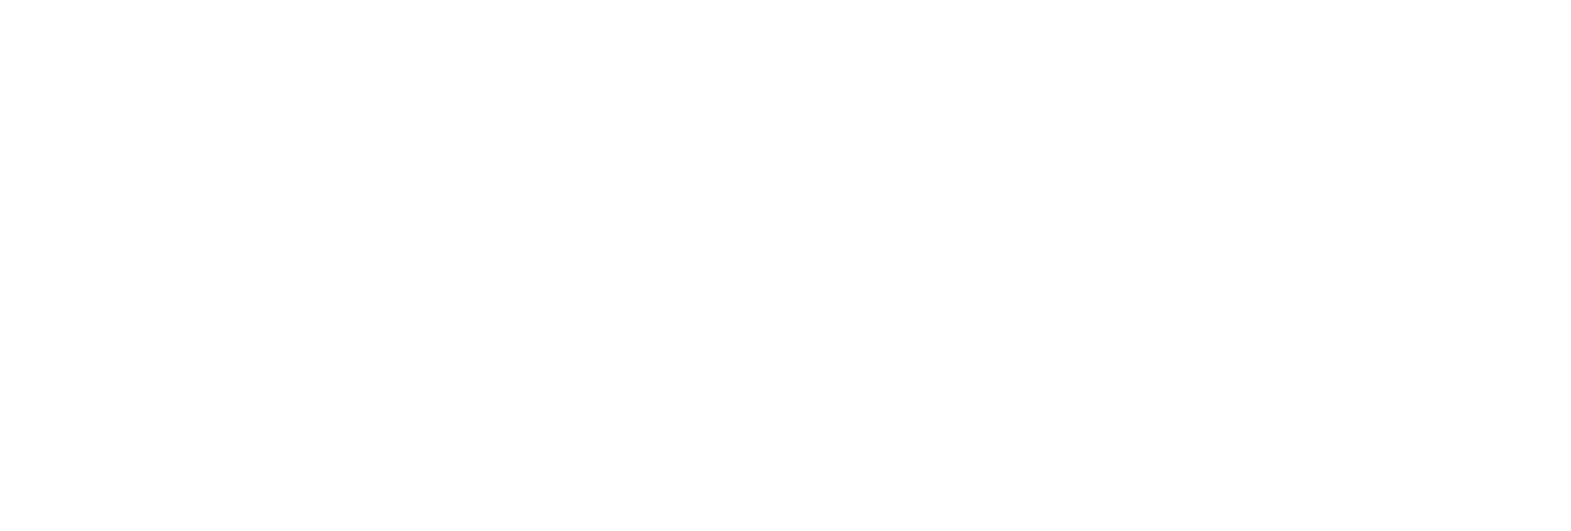 Universal Robina Corporation logo grand pour les fonds sombres (PNG transparent)